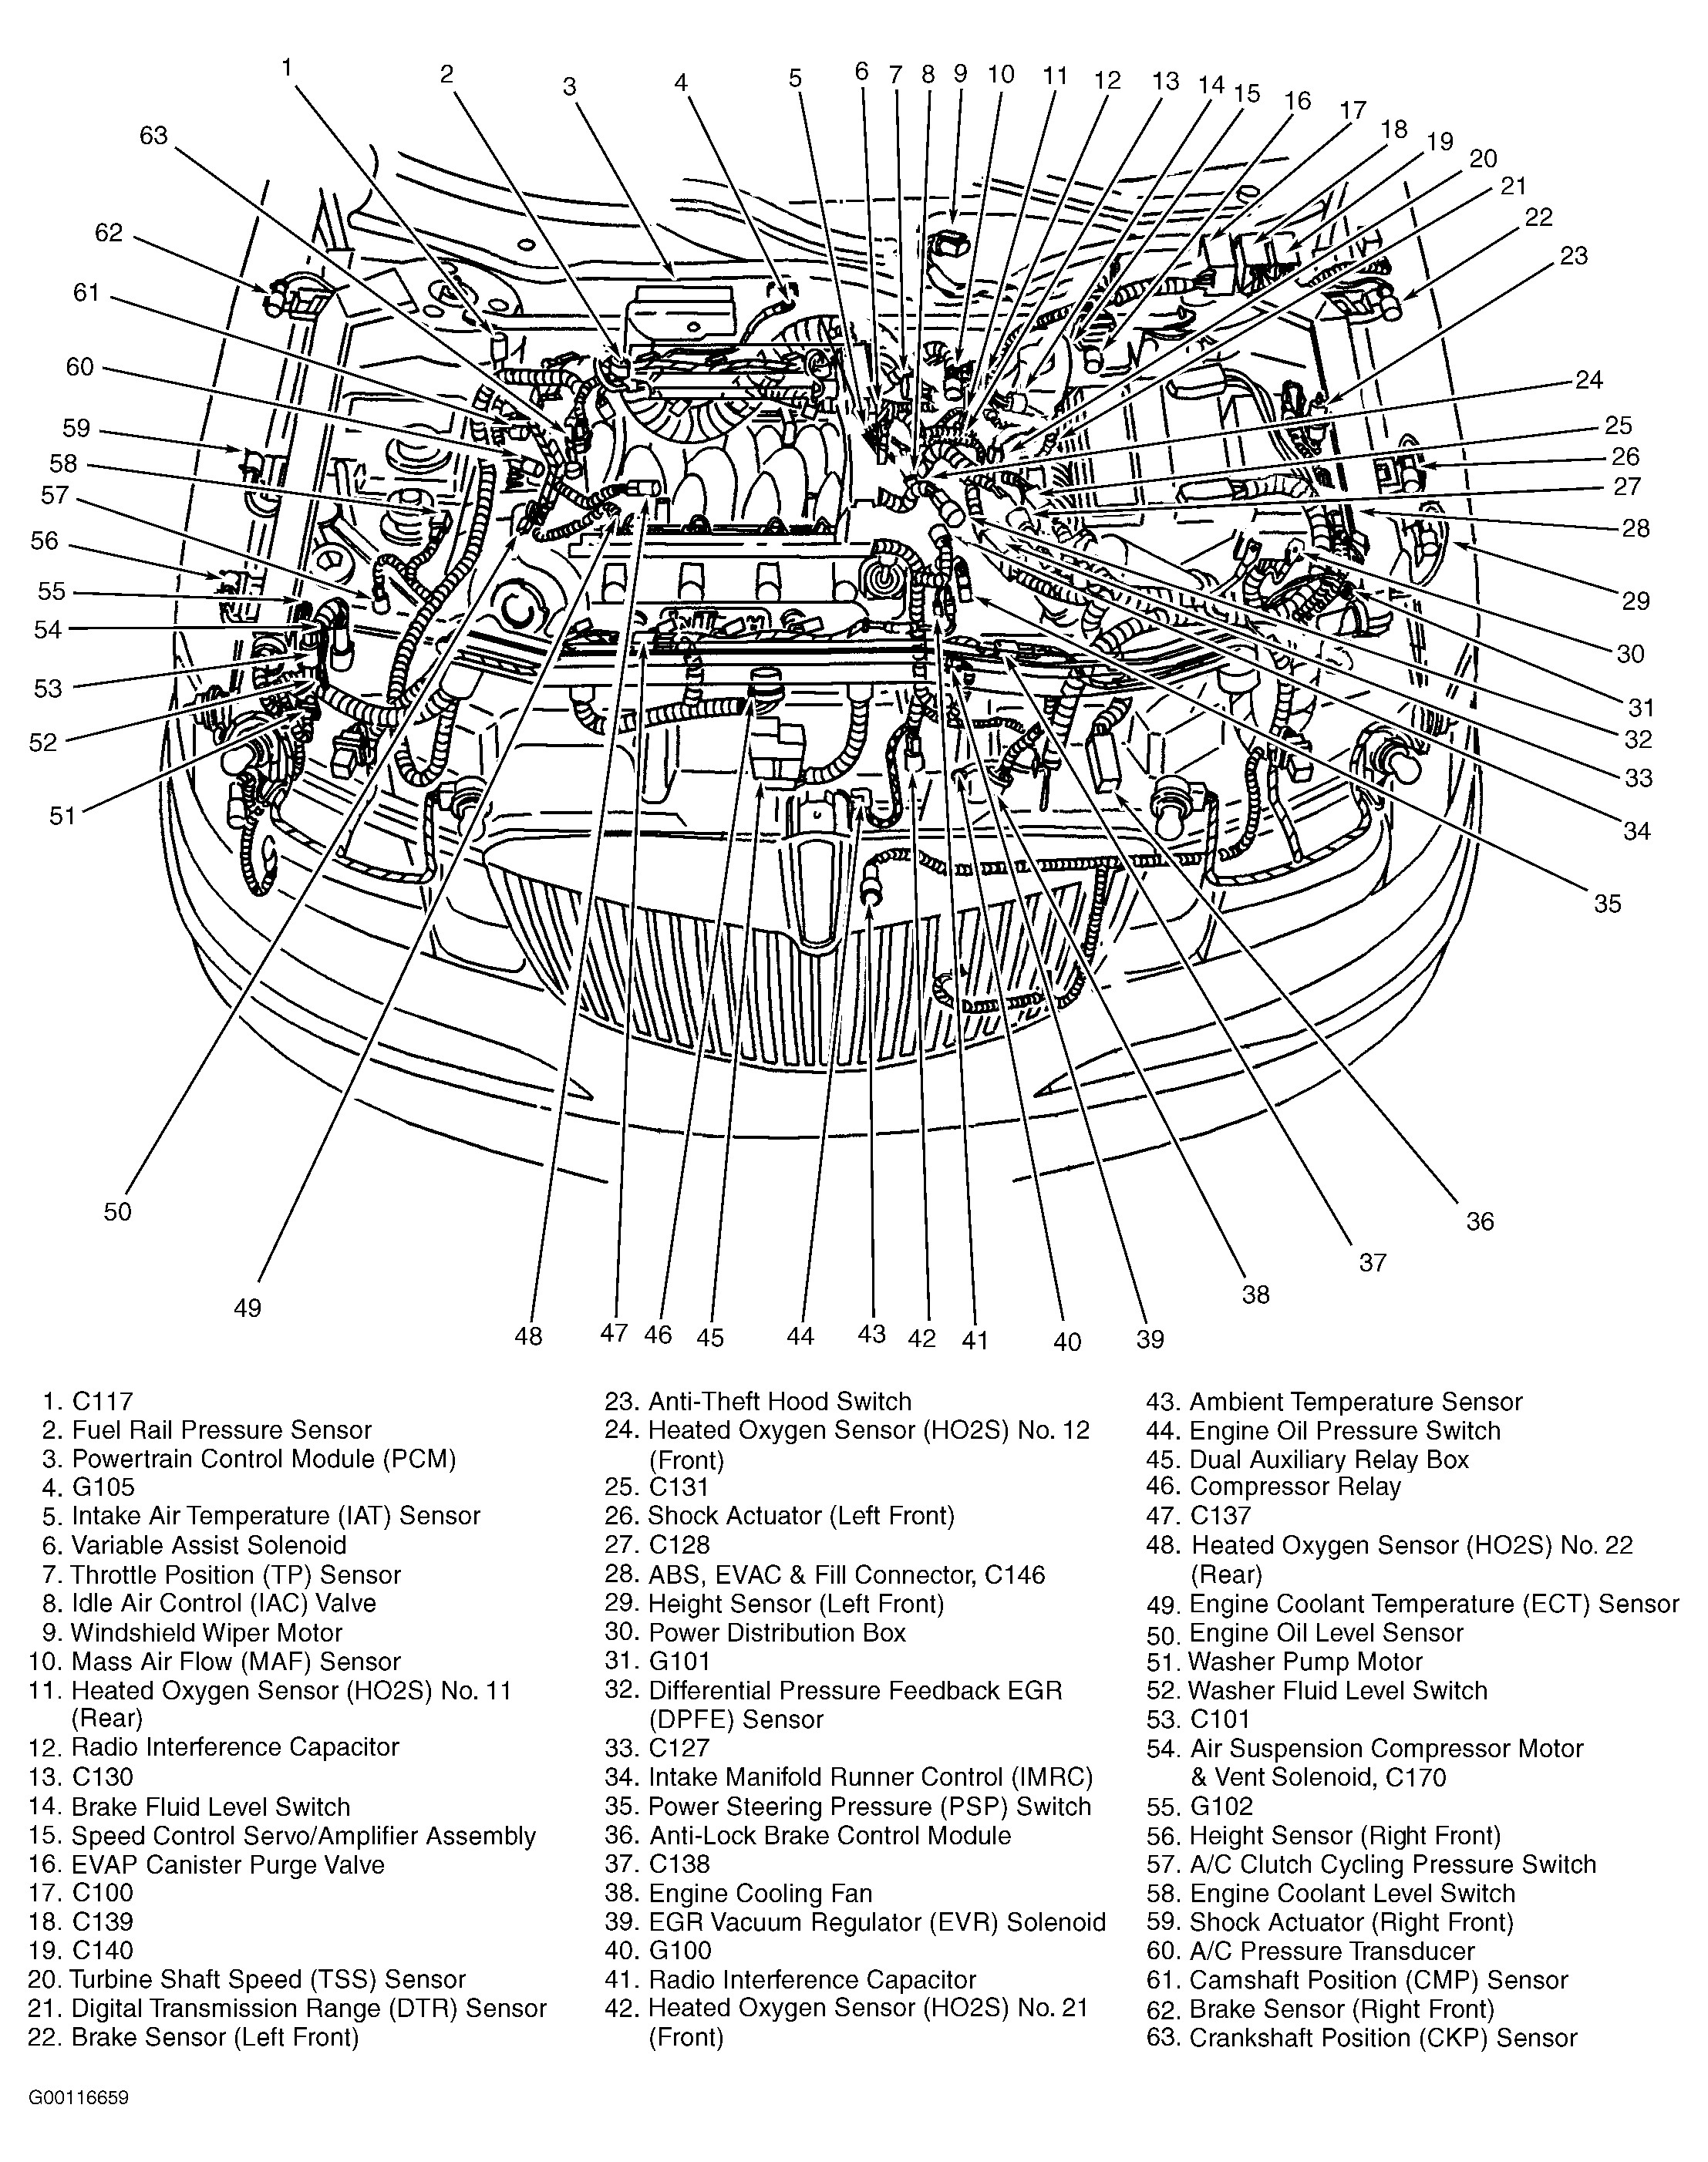 2000 Lincoln Ls Engine Diagram 1964 Lincoln Continental Wiring Diagram 1964 Lincoln Continental Of 2000 Lincoln Ls Engine Diagram